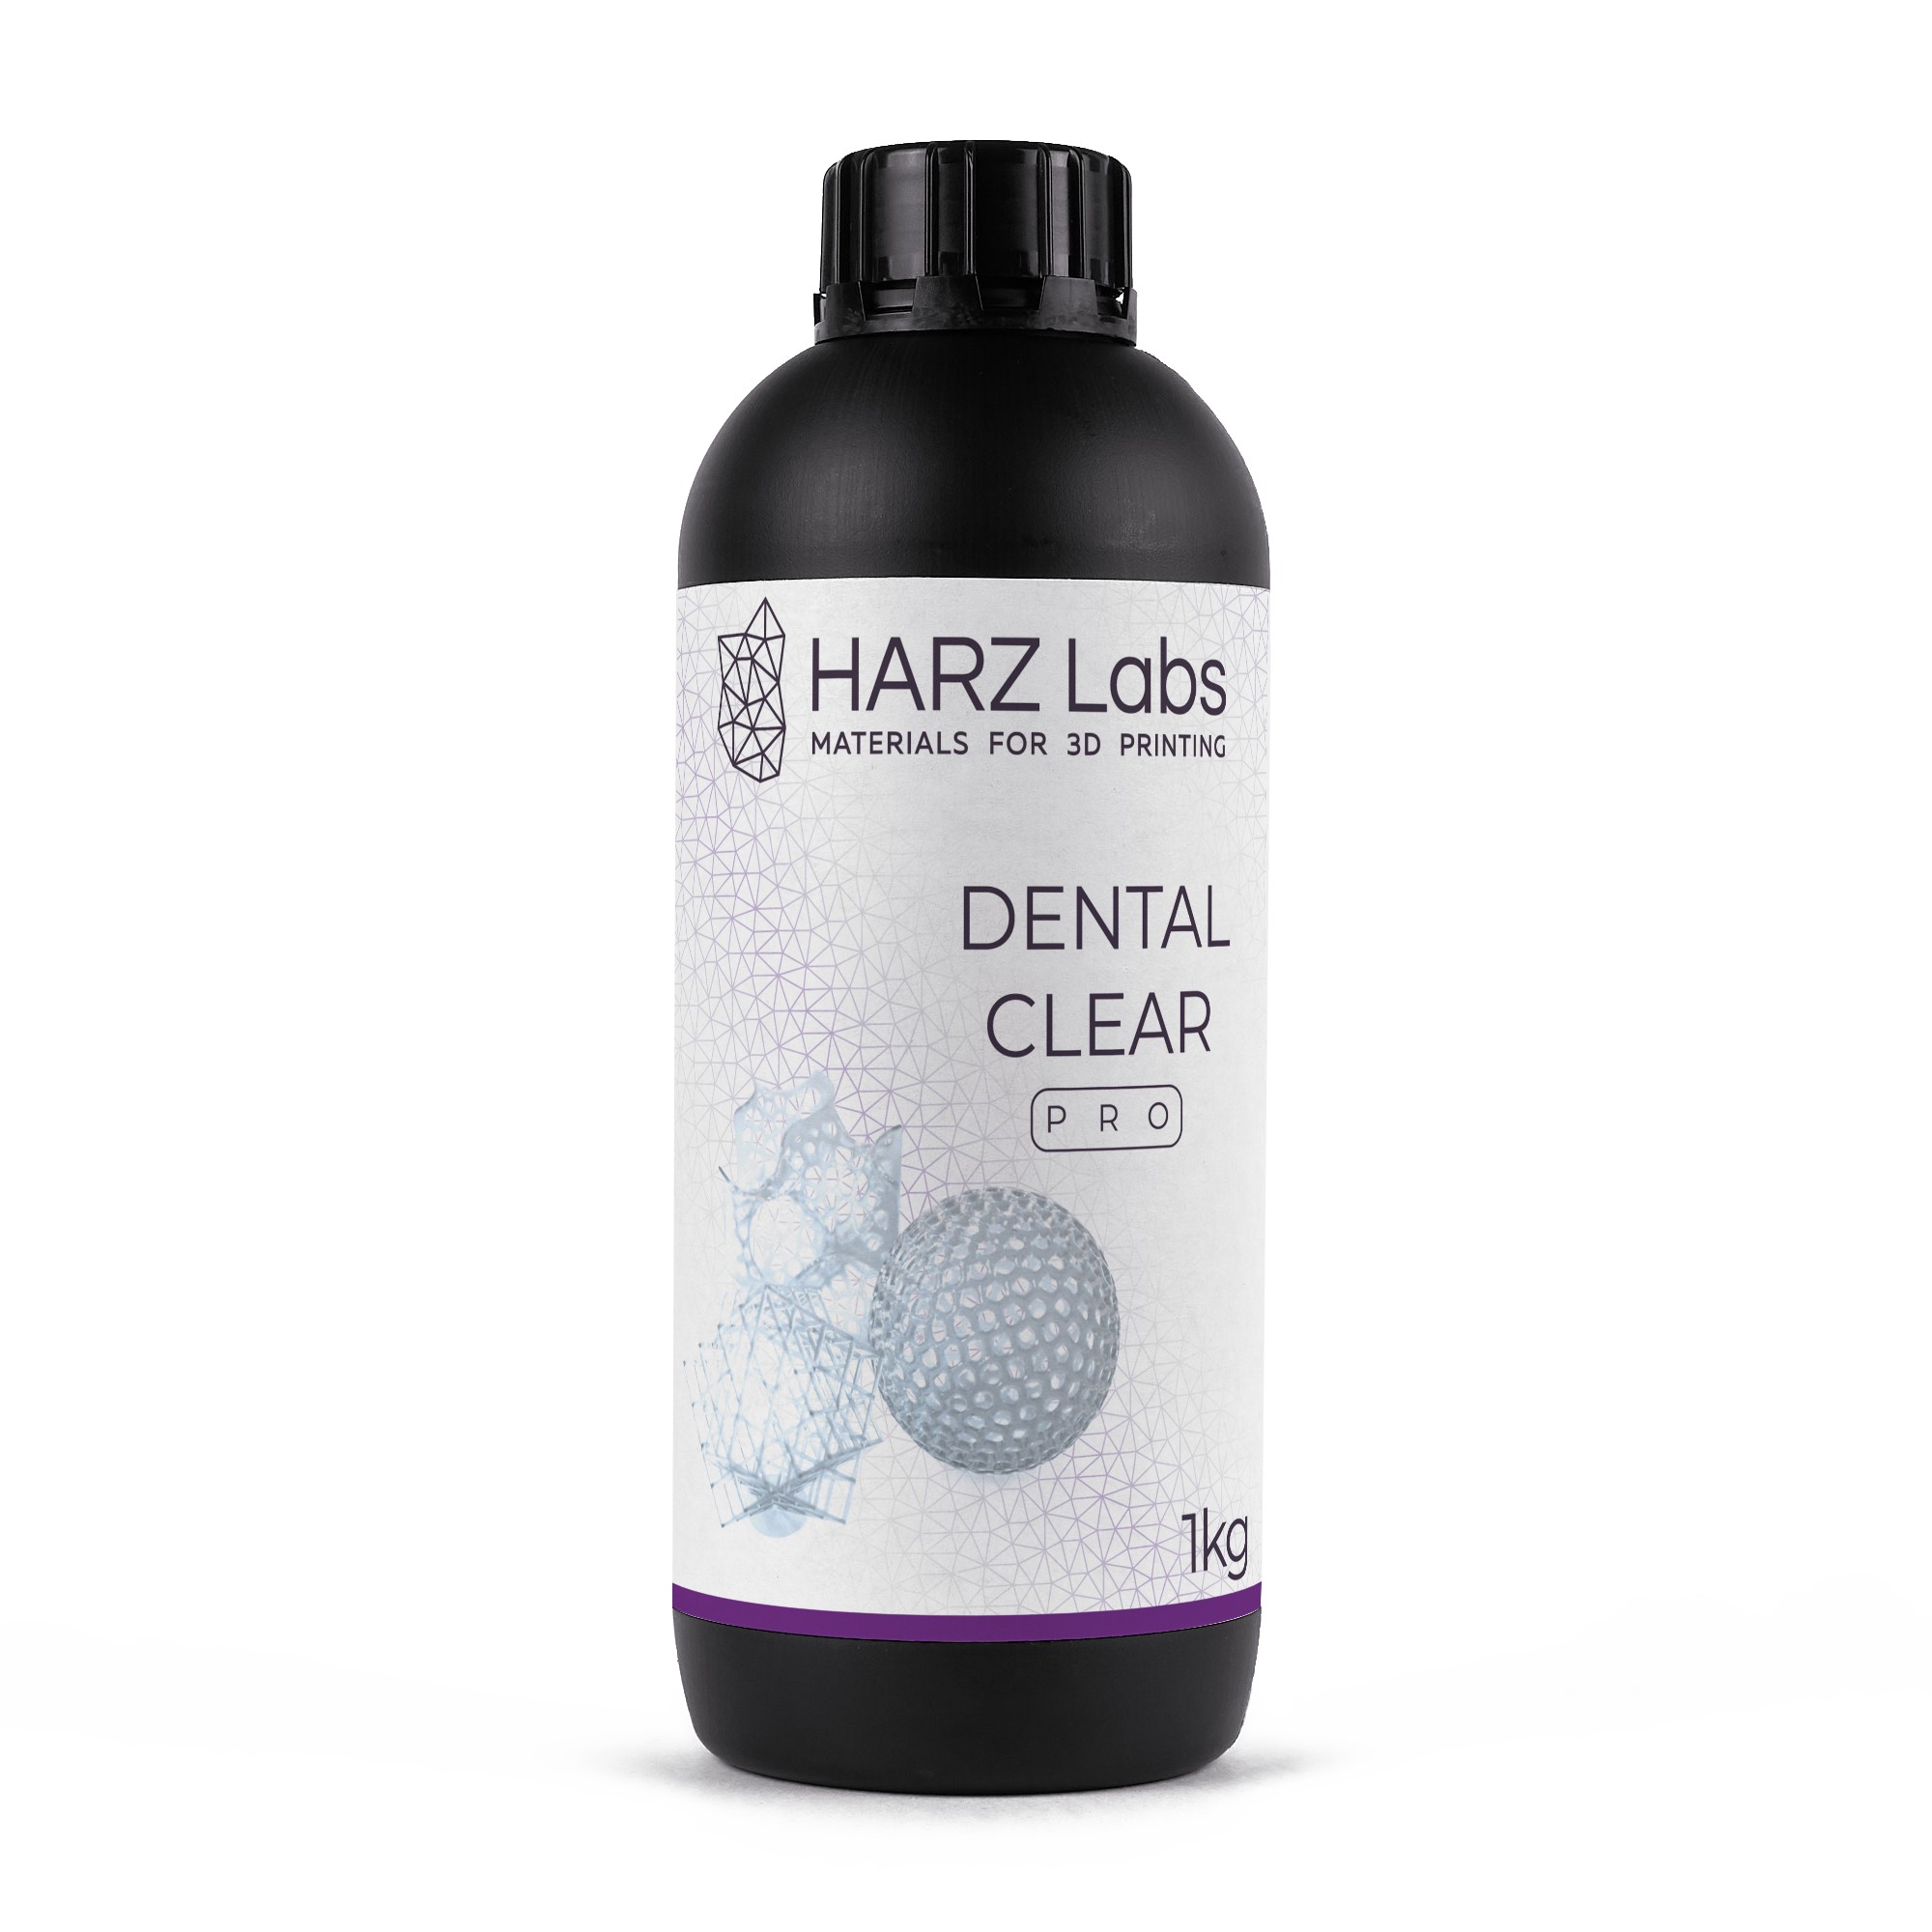  HARZ Labs Dental Clear PRO (1 )